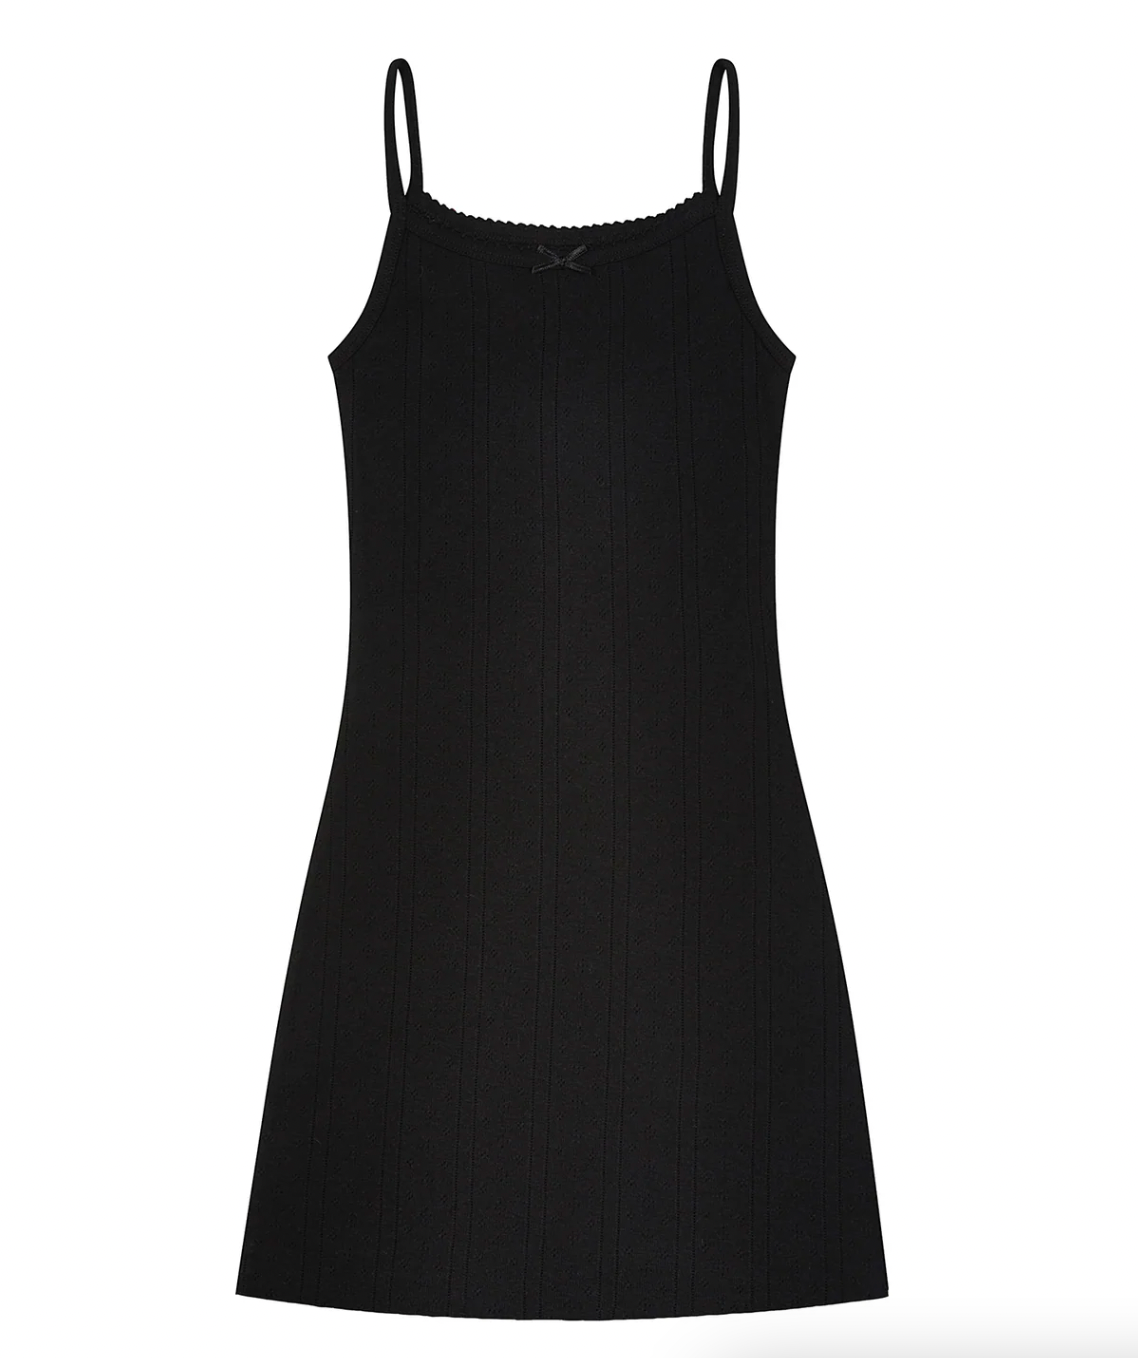 Product Image for Picot Trim Dress, Black